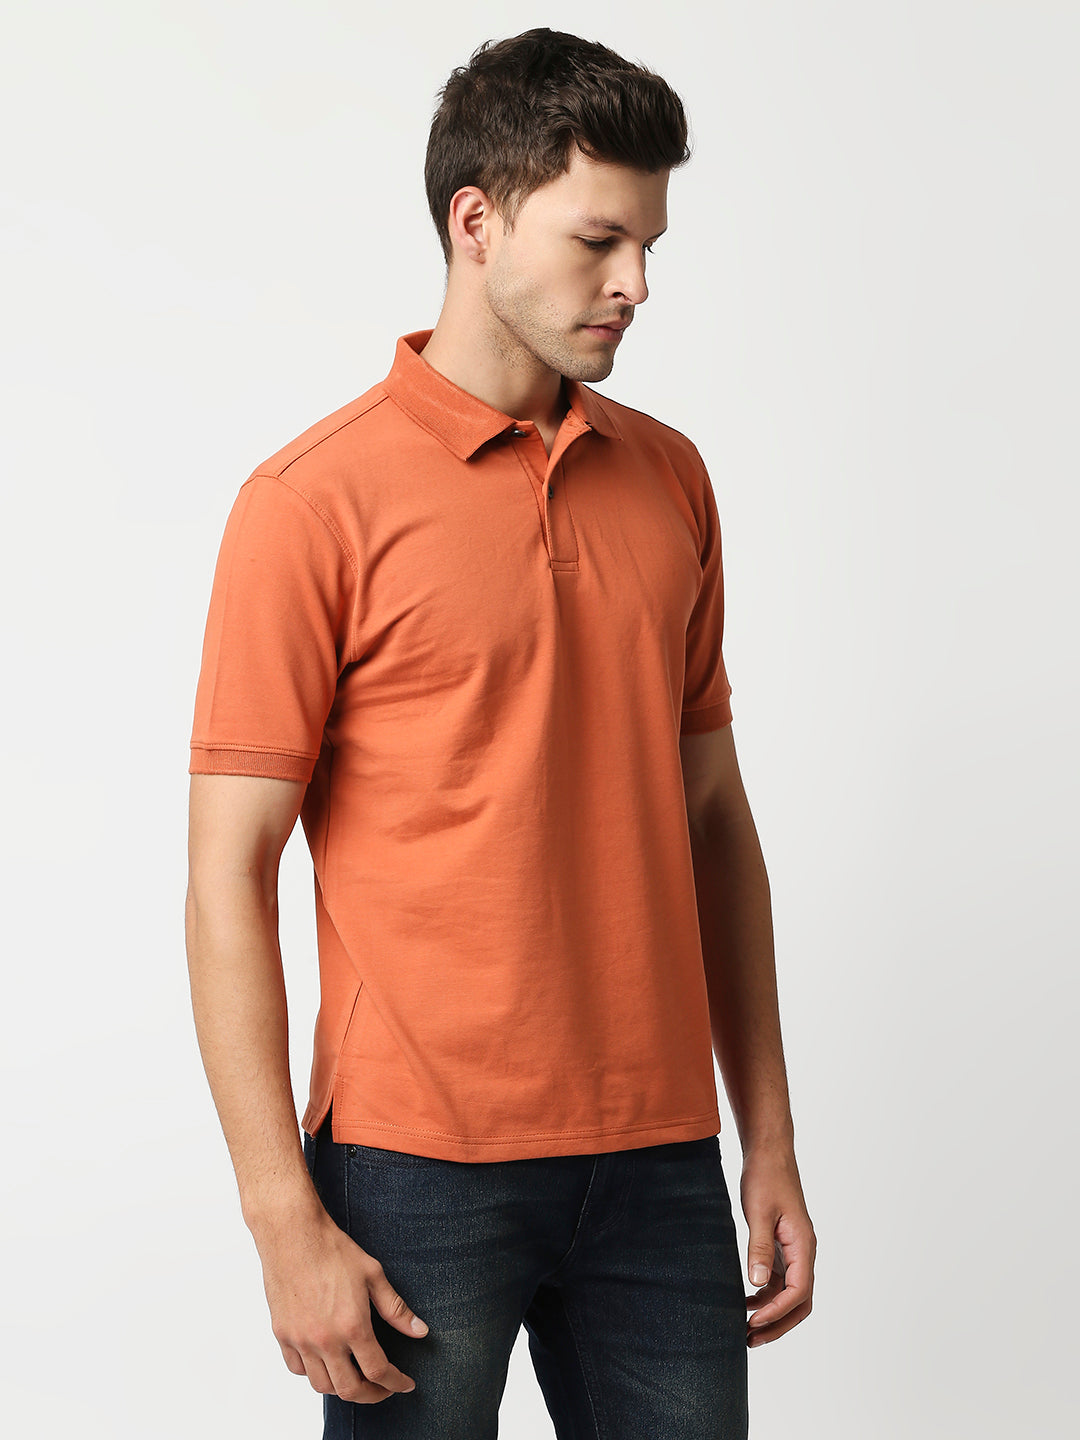 Buy Blamblack Men's Polo Plain Rust Color T shirt